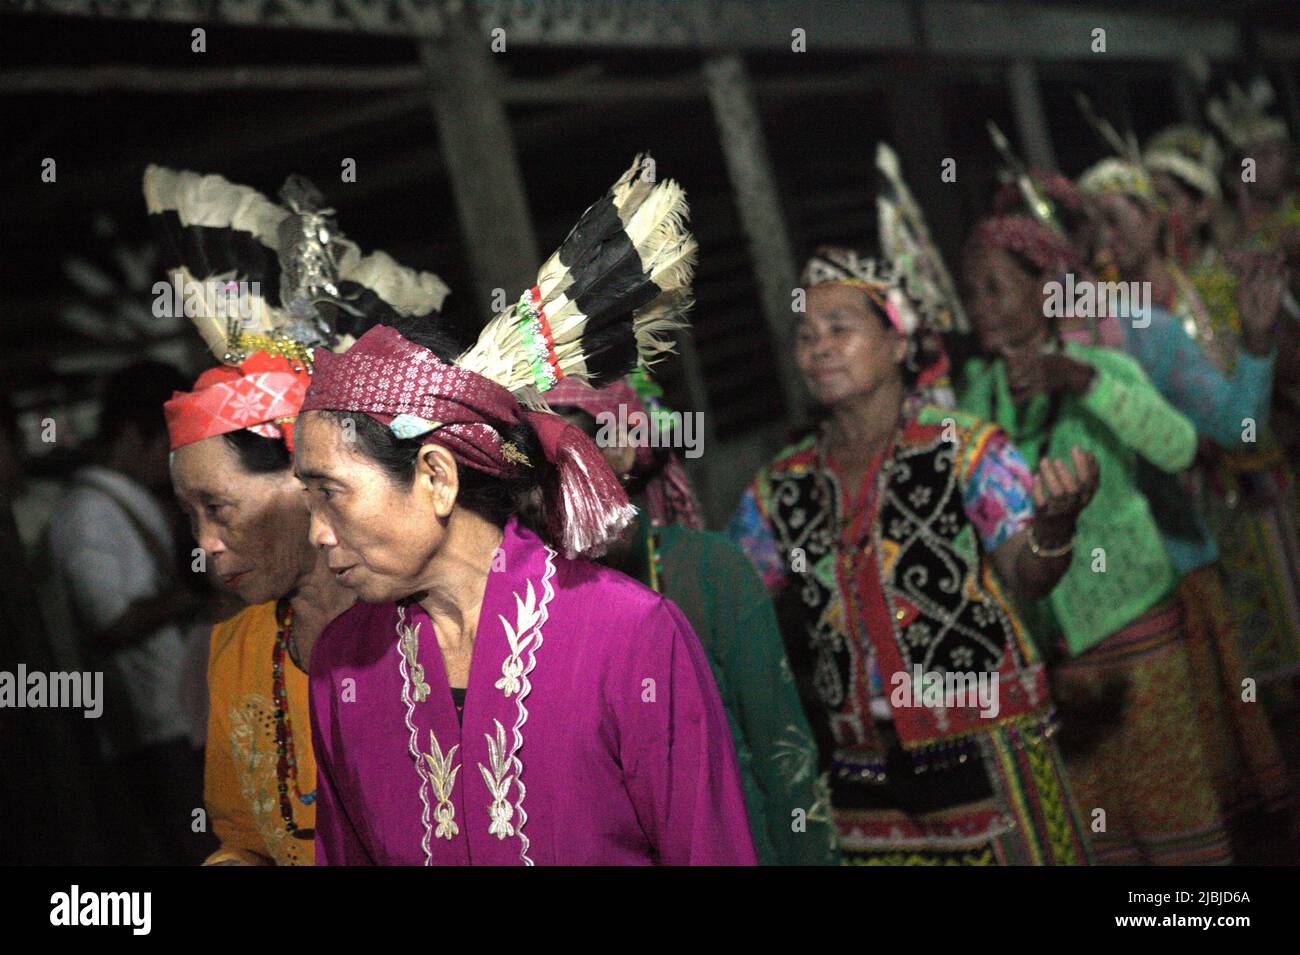 Women dancing in a line as they are welcoming guests during an ecotourism event at Bali Gundi longhouse of traditional Dayak Taman community in Sibau Hulu, Putussibau Utara, Kapuas Hulu, West Kalimantan, Indonesia. Stock Photo